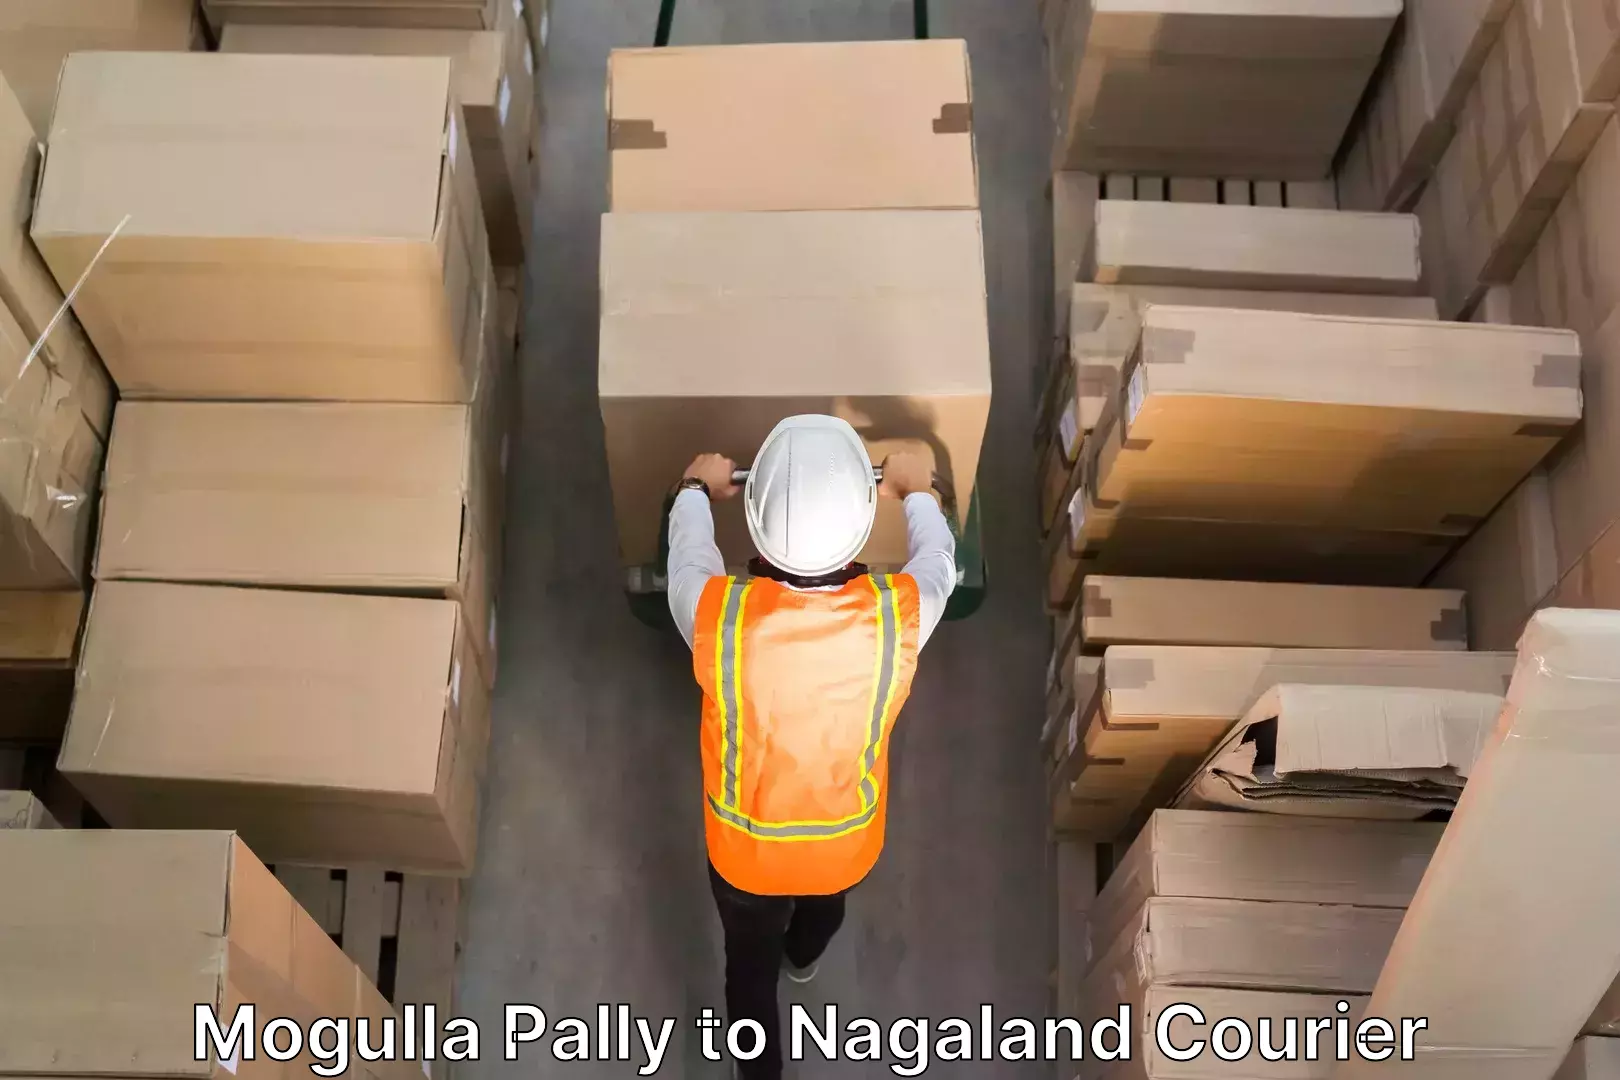 Professional furniture movers Mogulla Pally to Nagaland